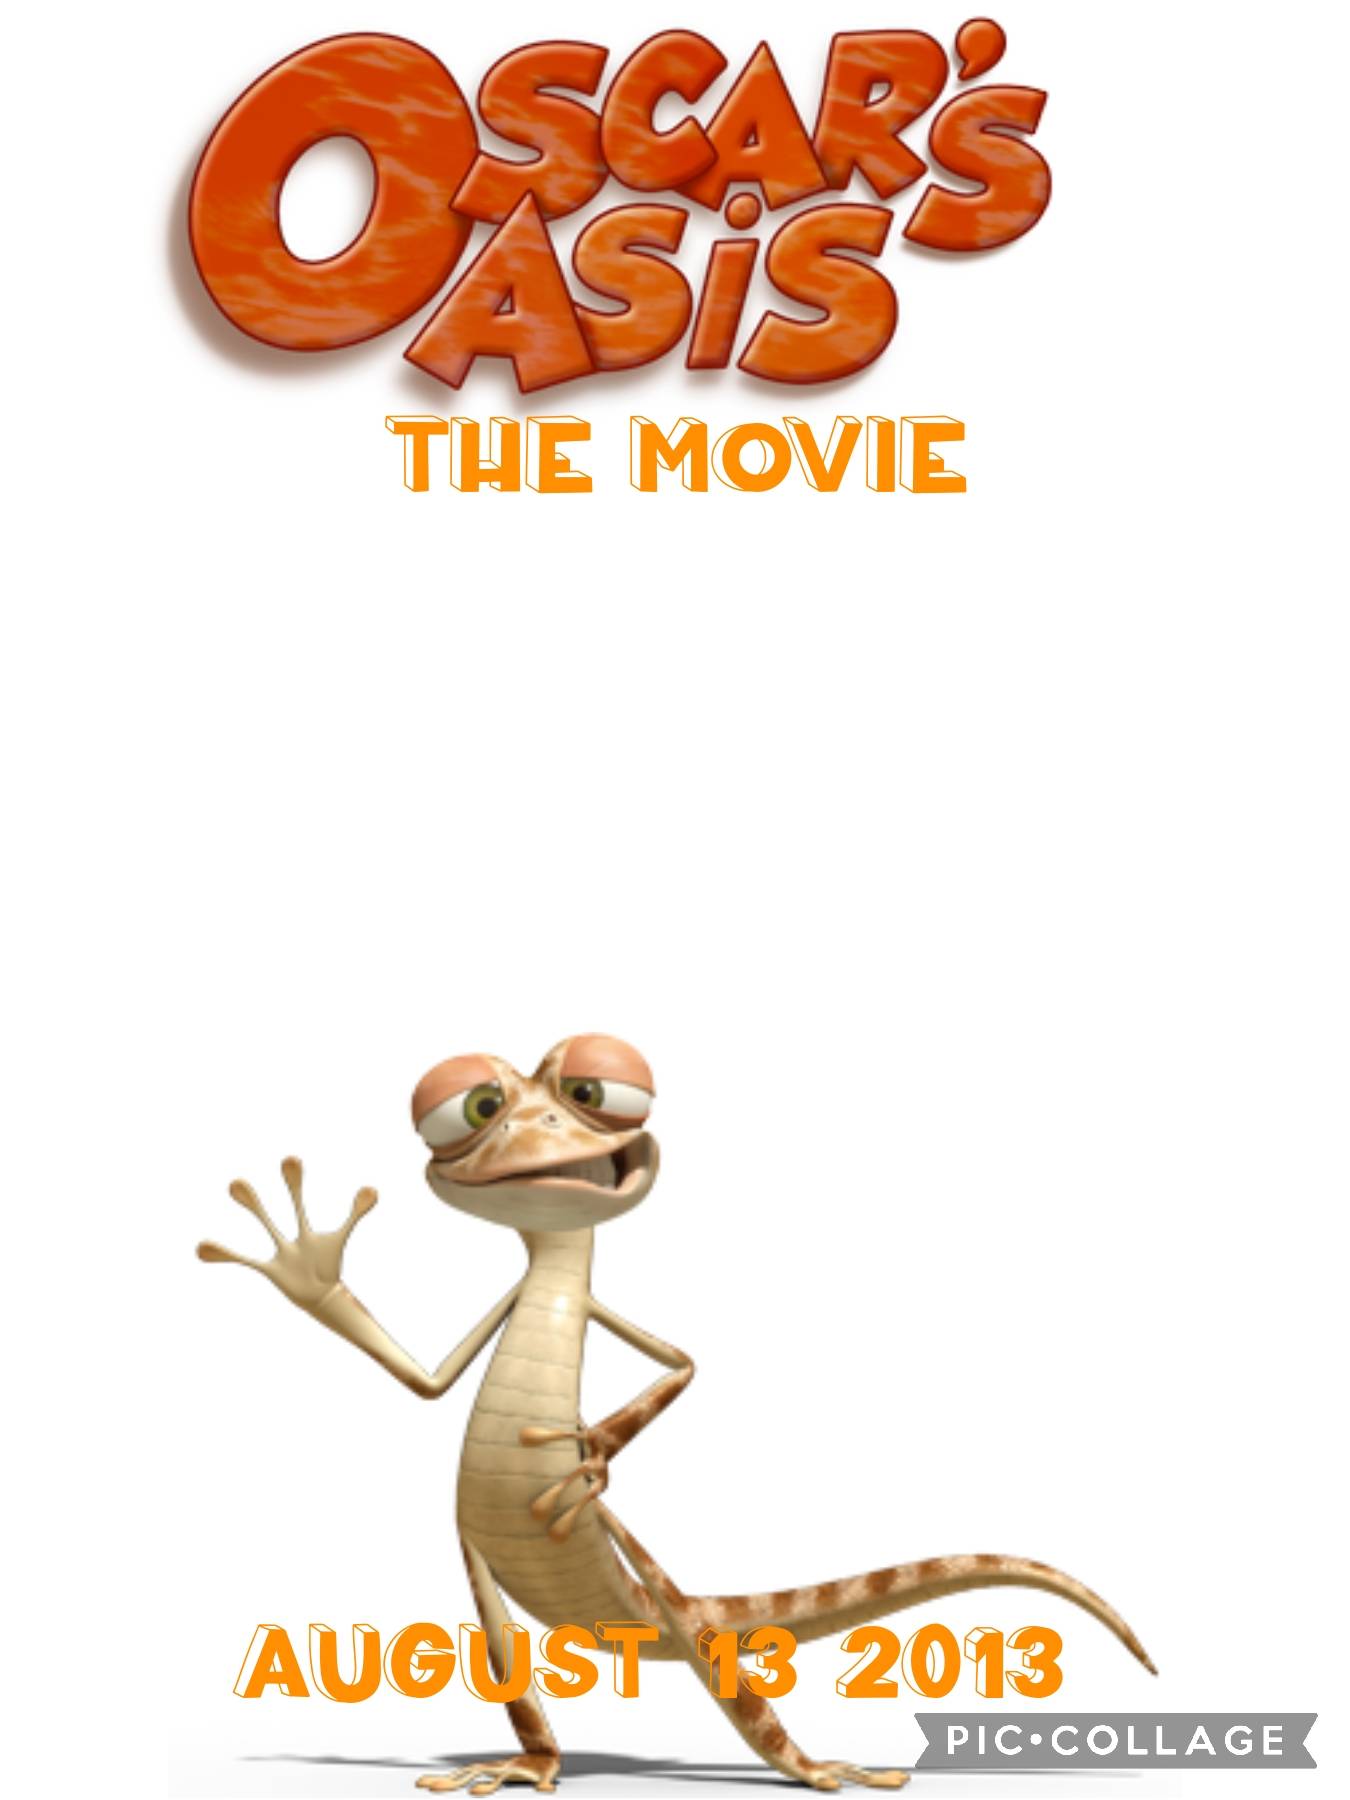 Watch Oscar's Oasis